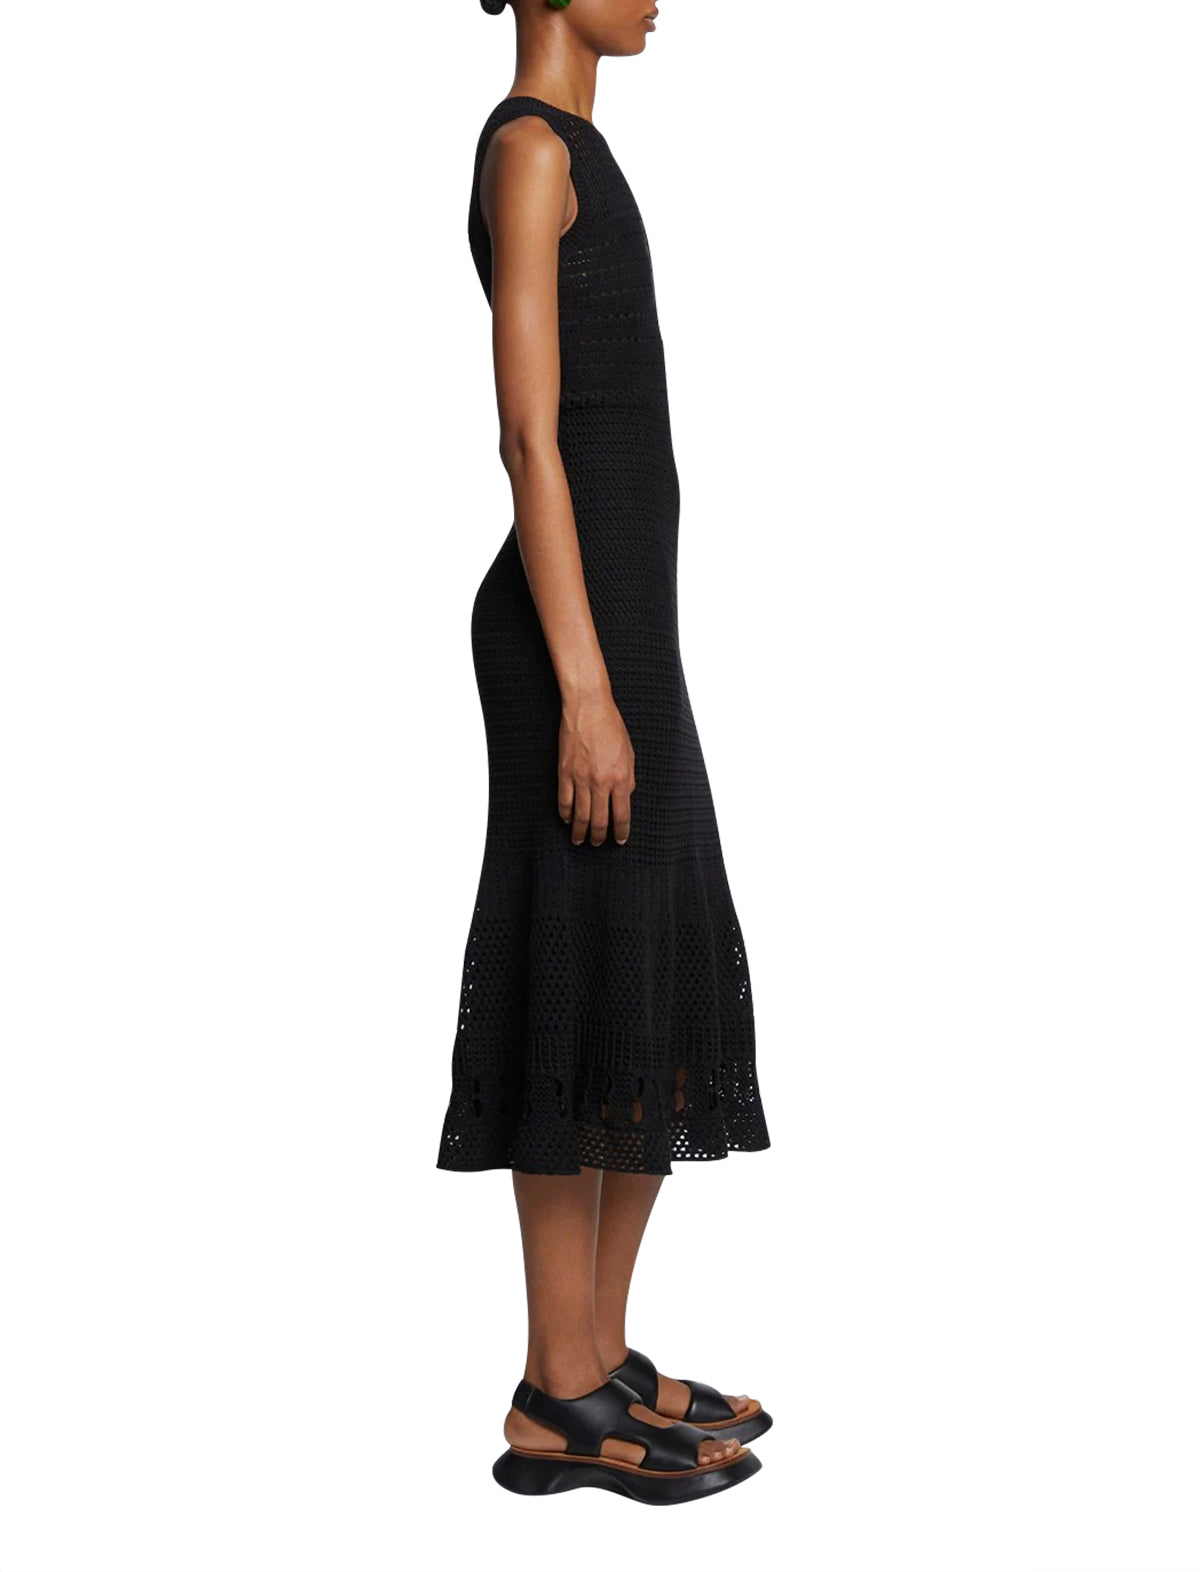 PROENZA SCHOULER WHITE LABEL Silk Cotton Pointelle Sleeveless Dress in Black